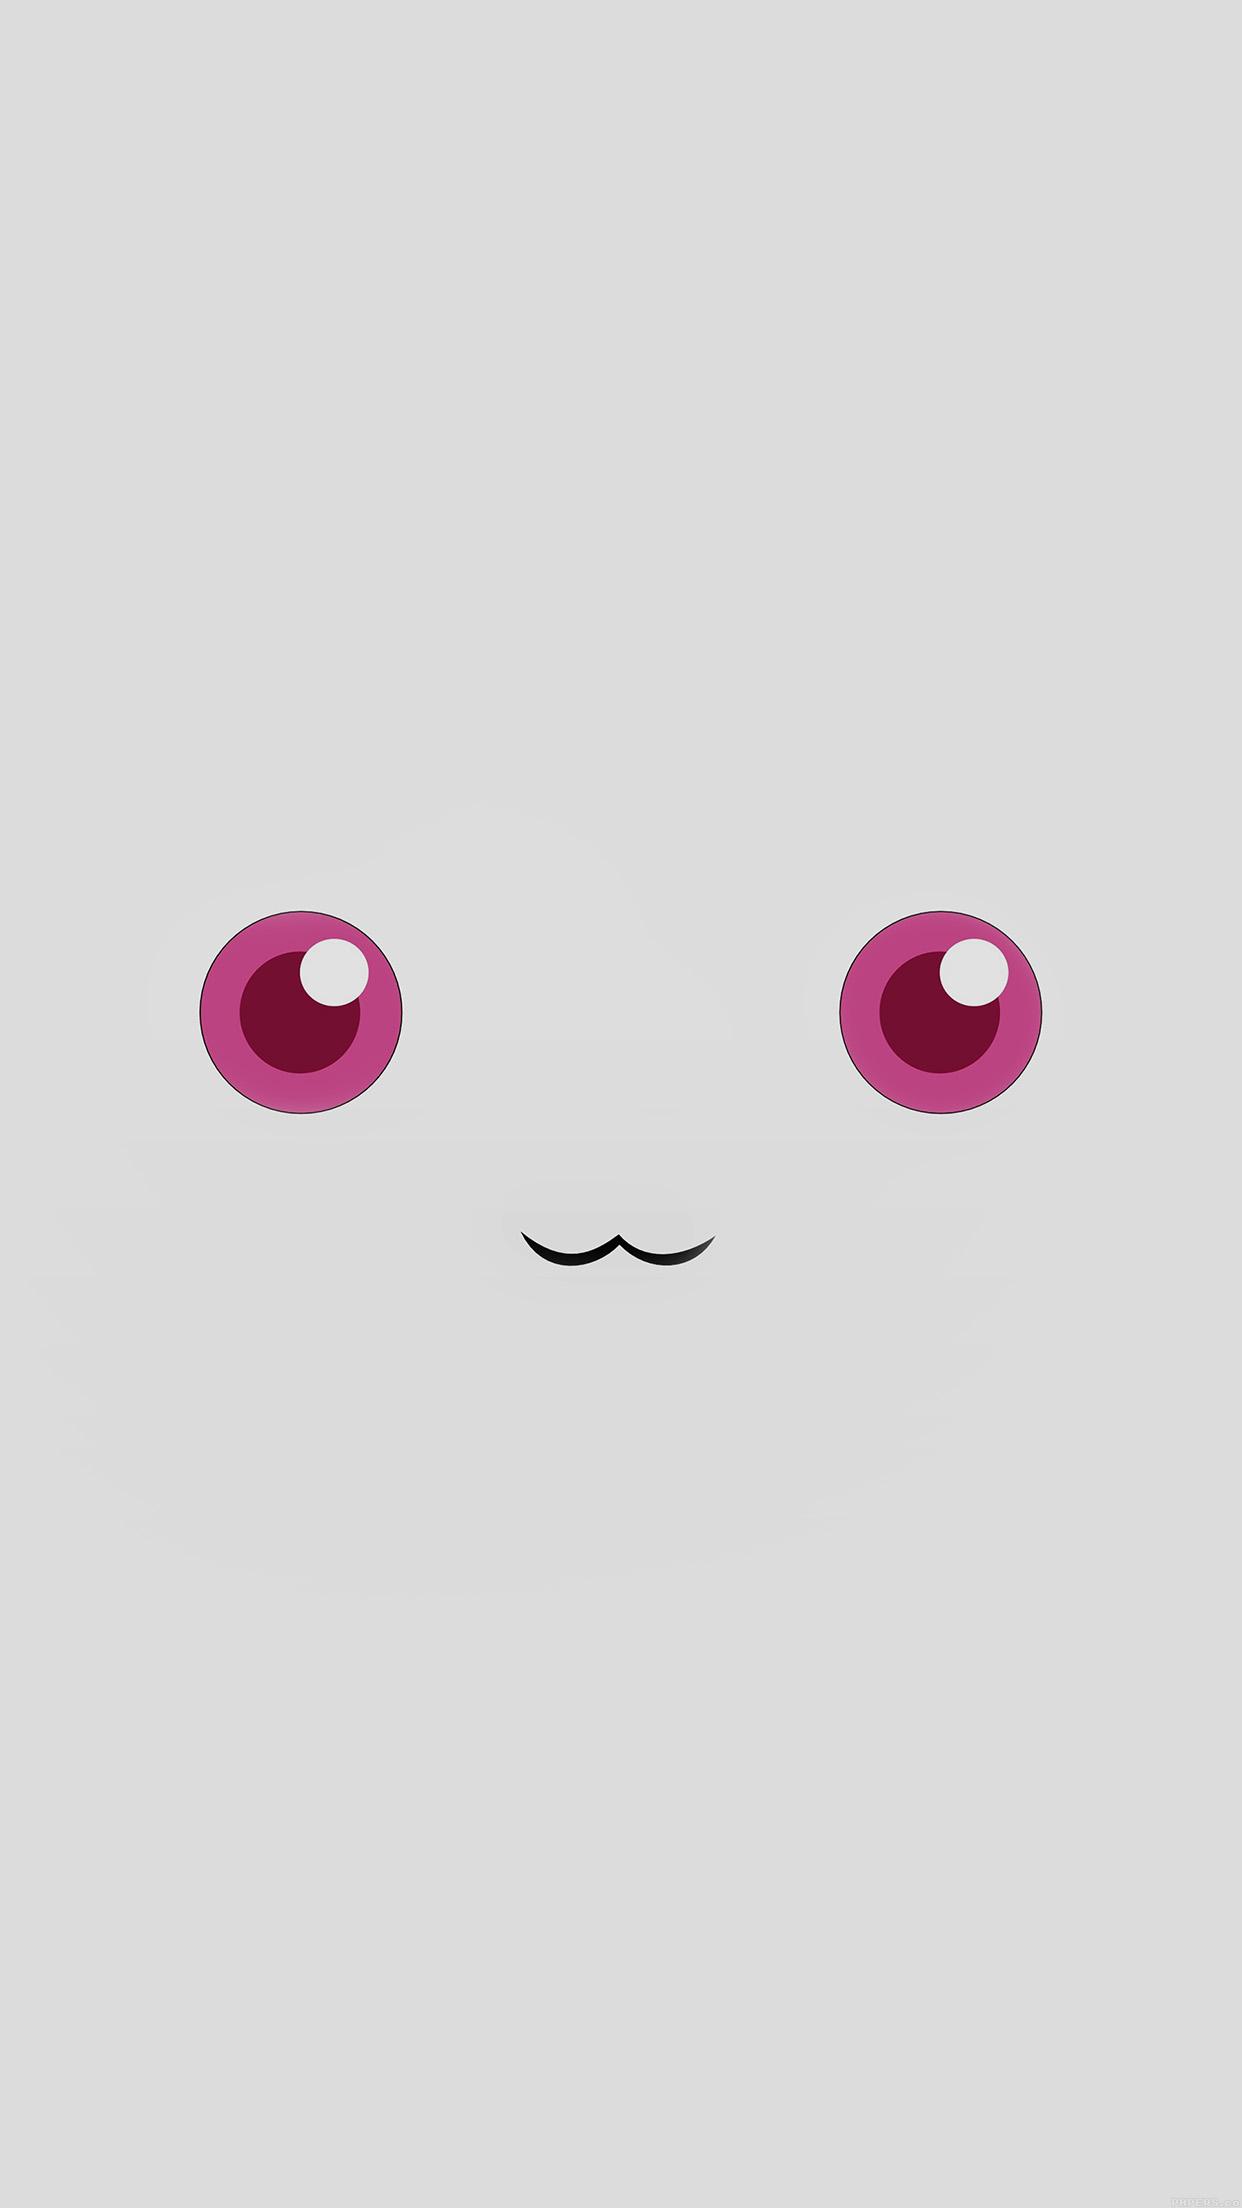 Cute Pokemon Character Anime Minimal Android wallpaper